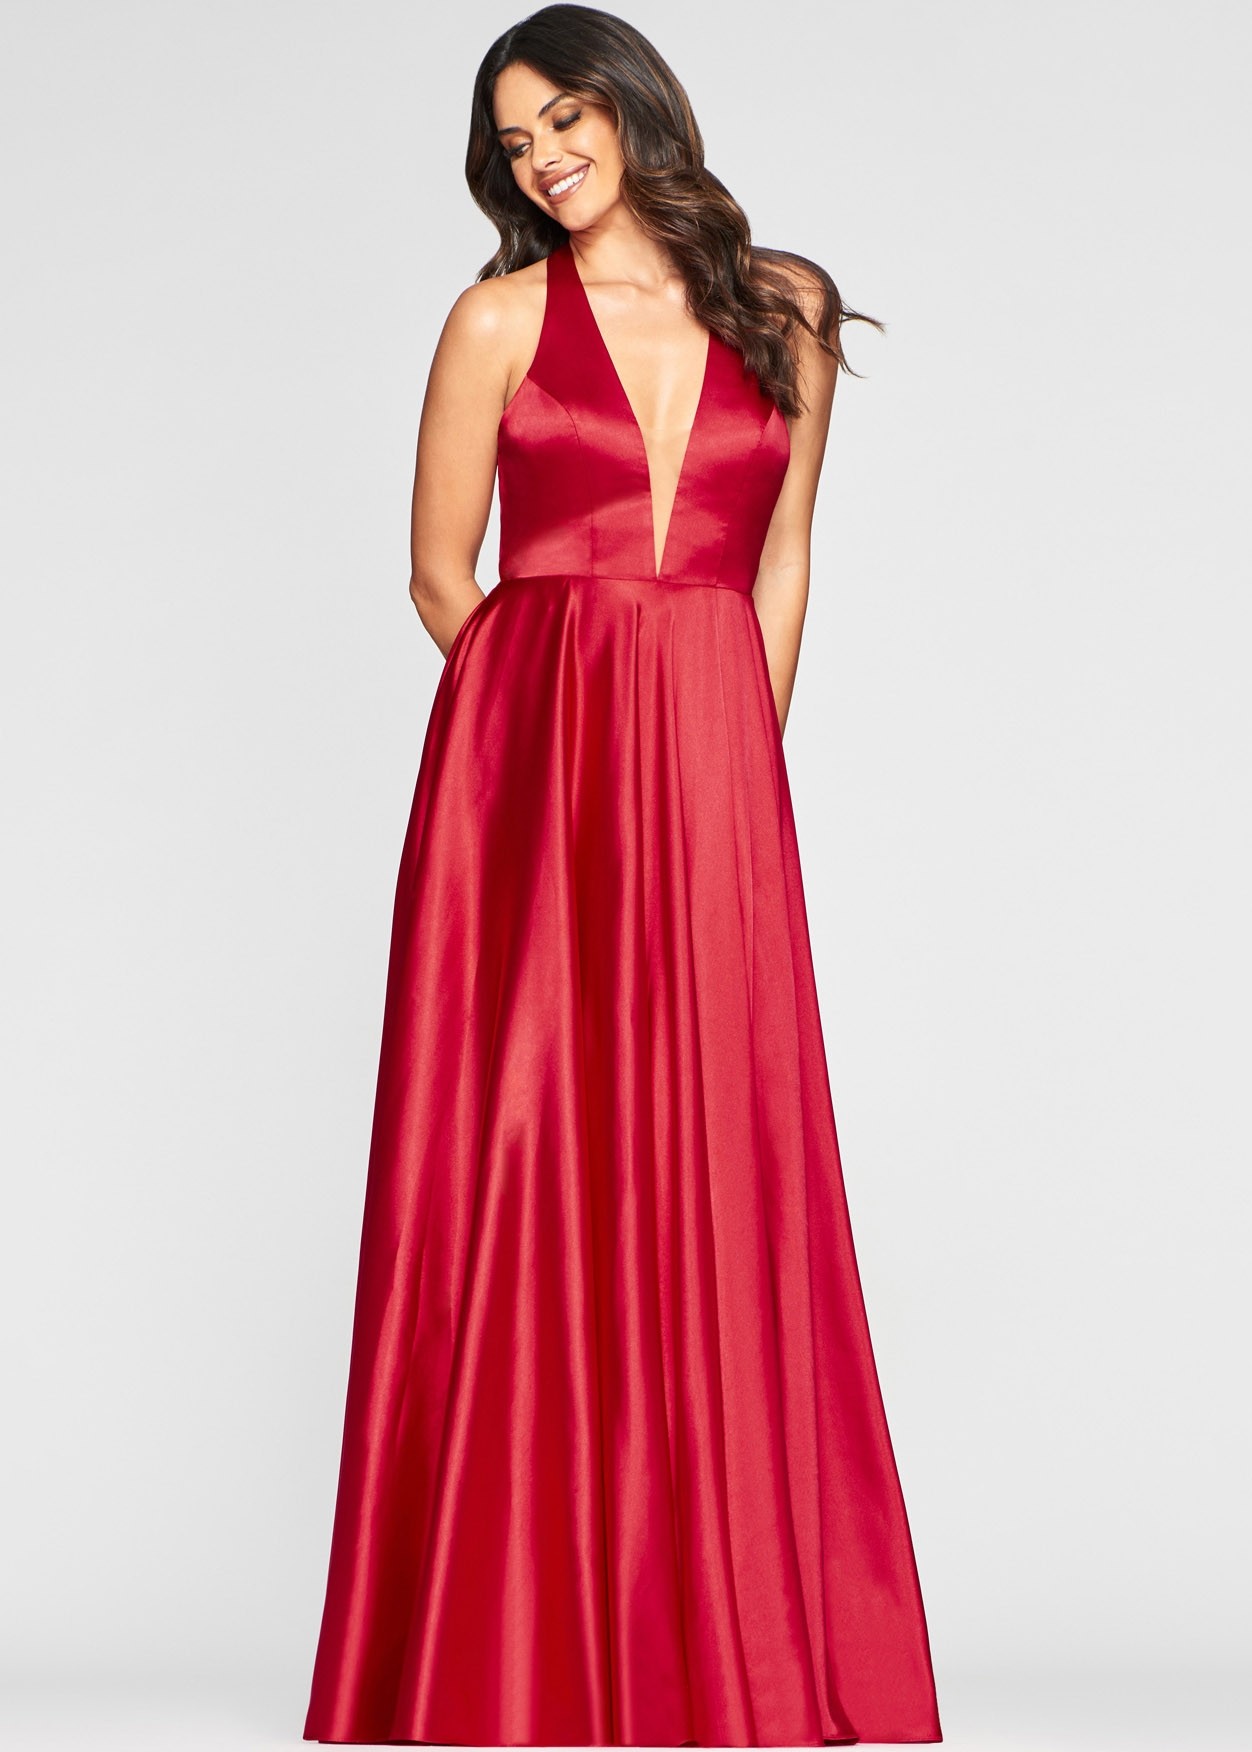 Faviana S10403 Prom Dress